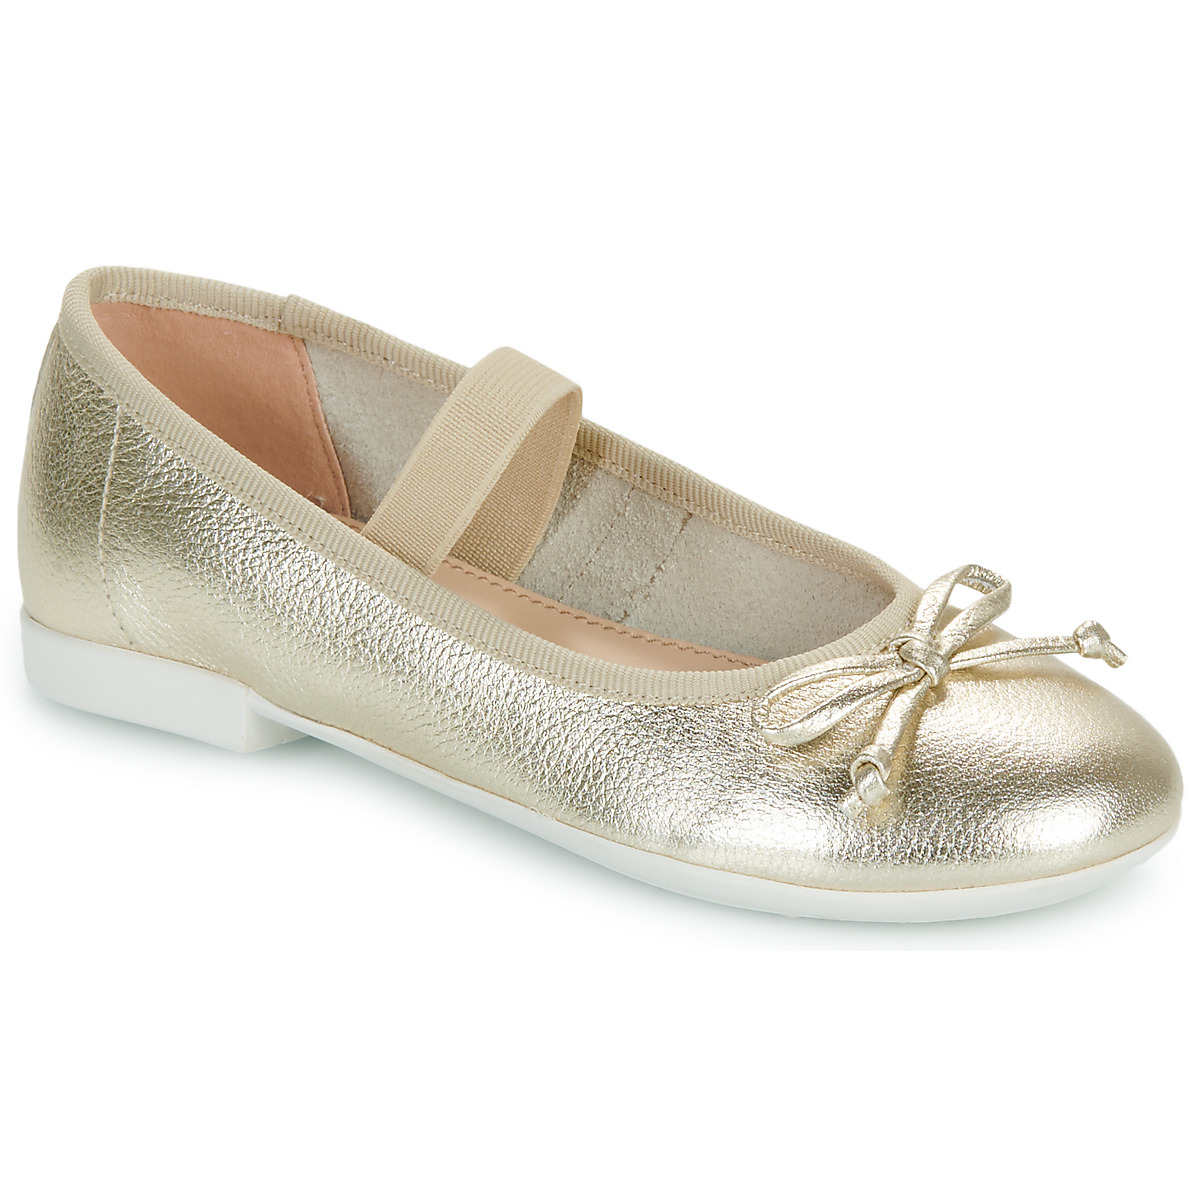 Shoes Girl Ballerinas Geox JR PLIE' Gold